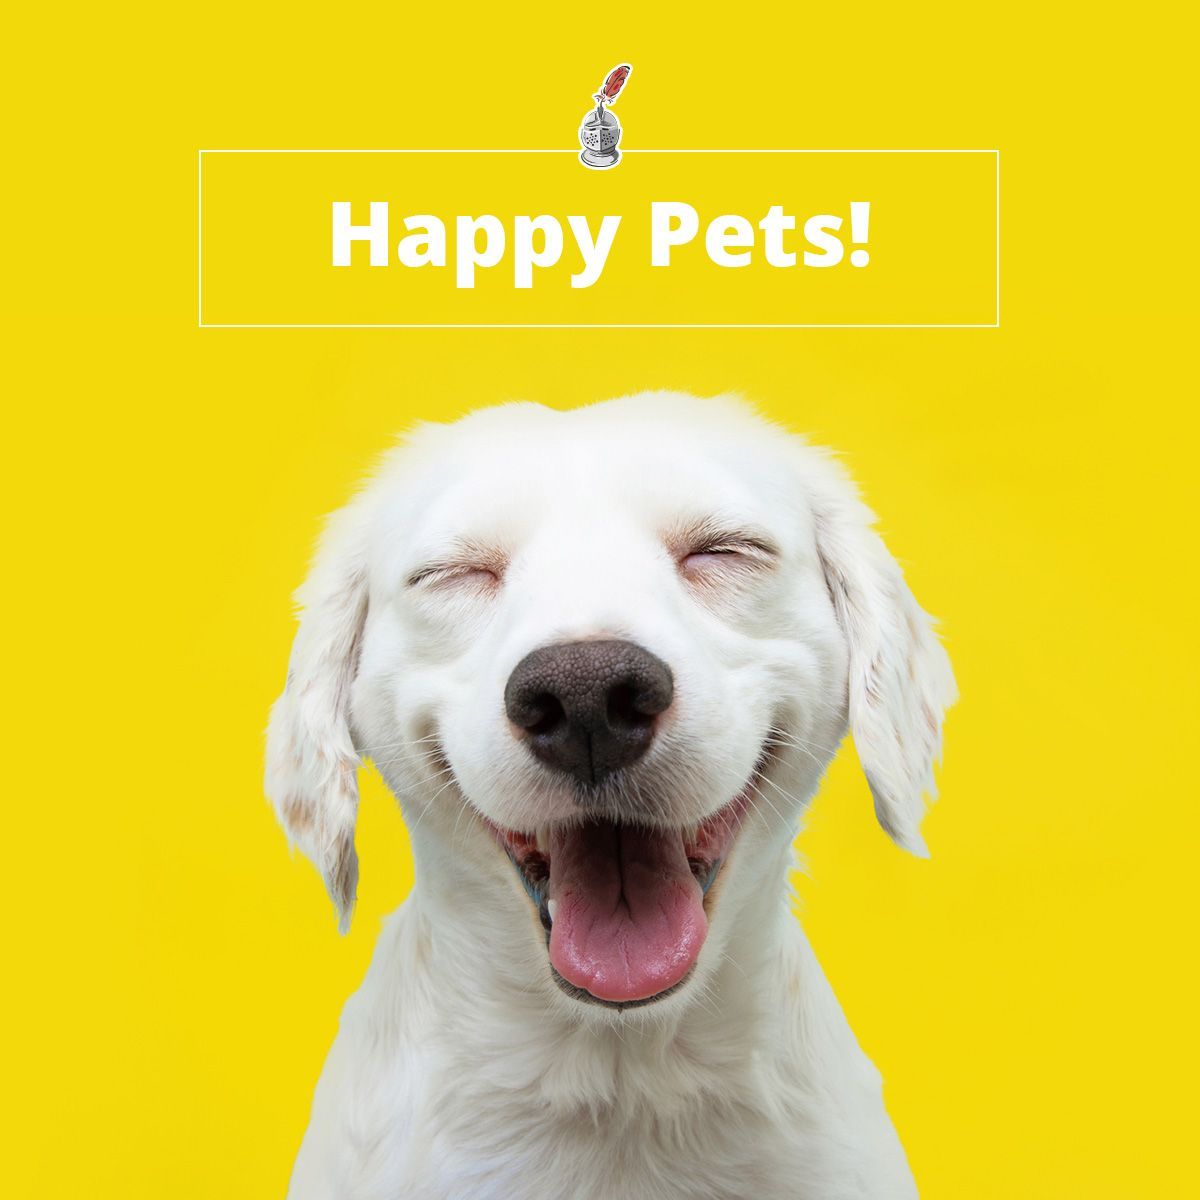 Happy Pets!